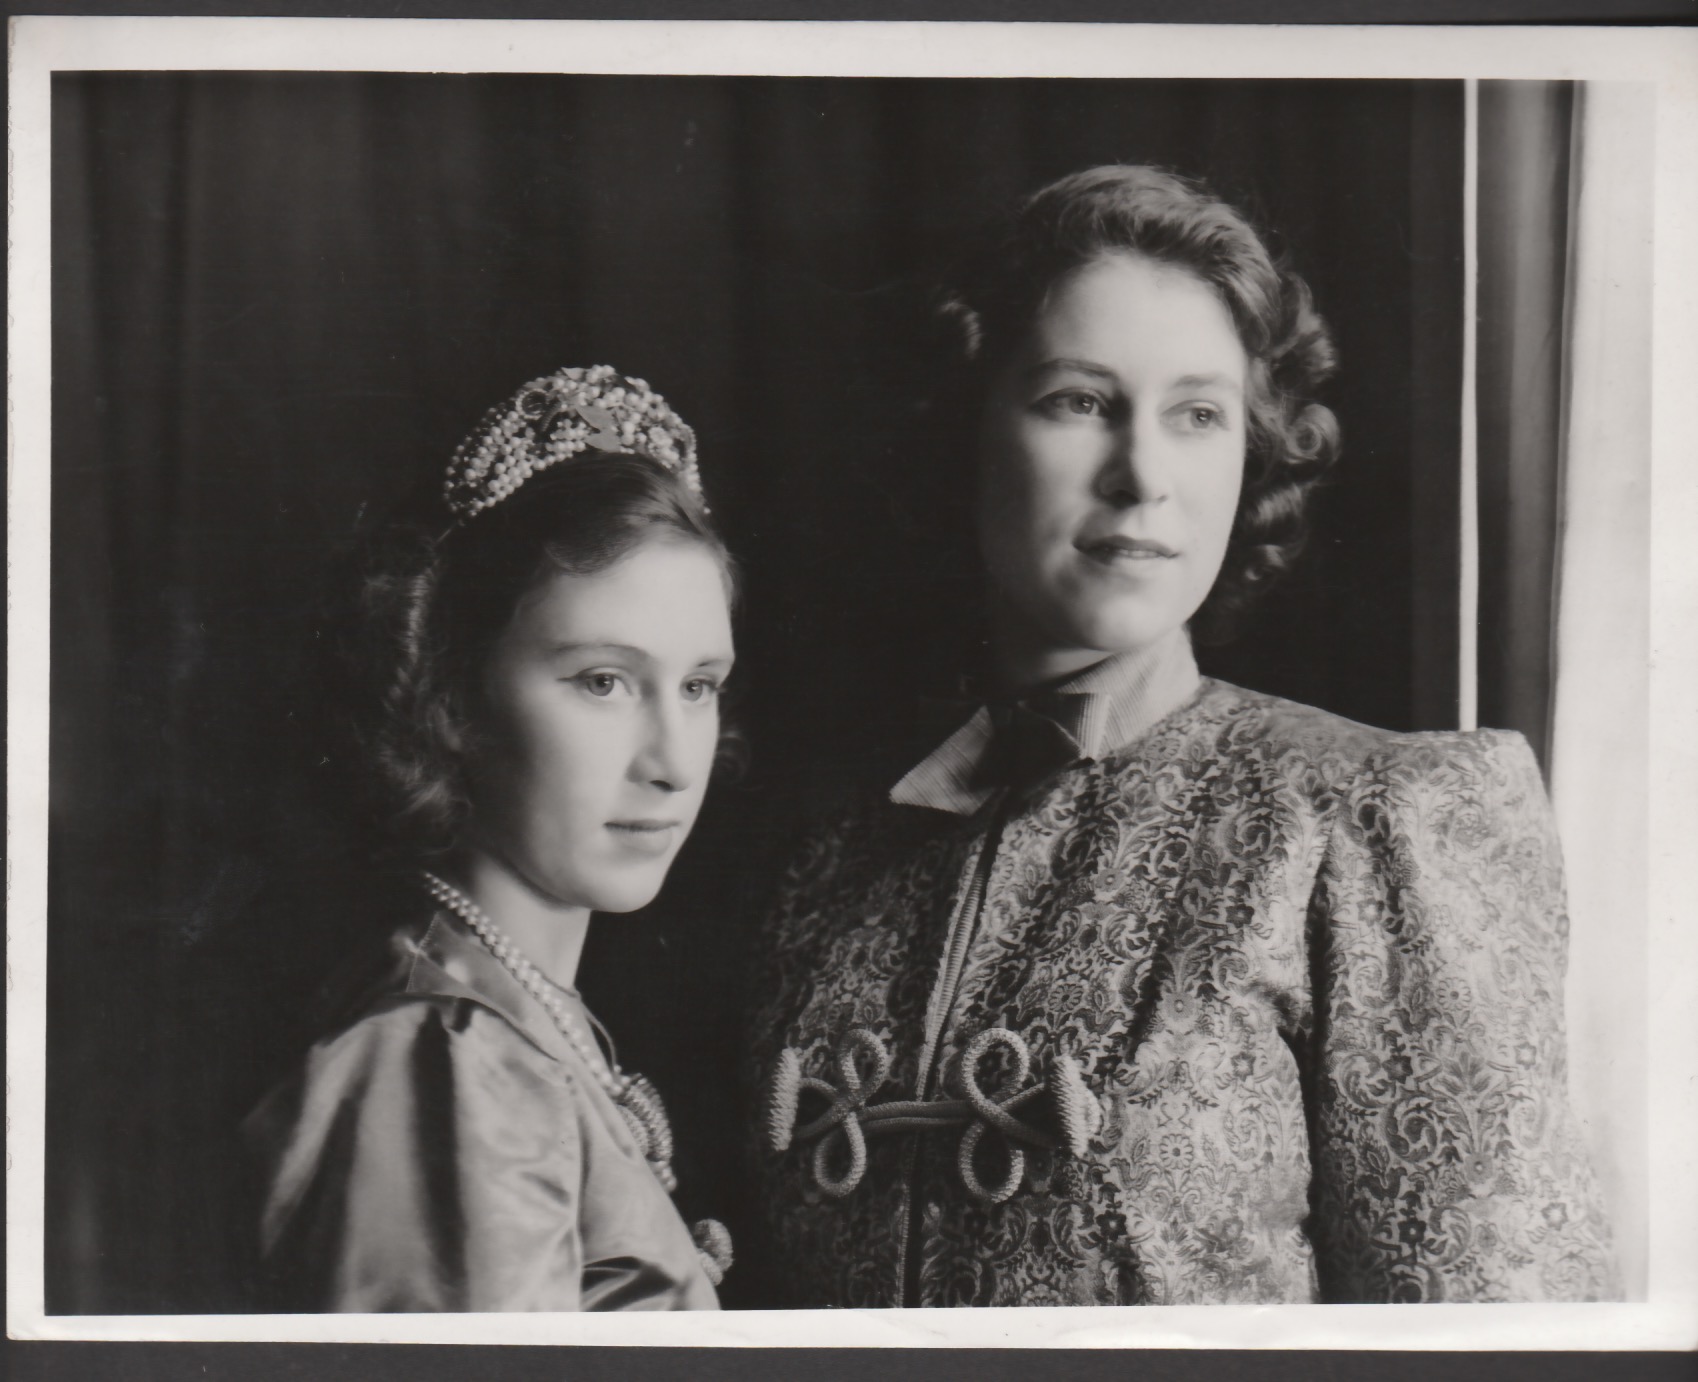 Royalty.GB ENTERTAINMENT WINDSOR CASTLE 1941-44 PRINCESS ELIZABETH PRINCESS MARGARET WORLD WAR II - Image 4 of 15